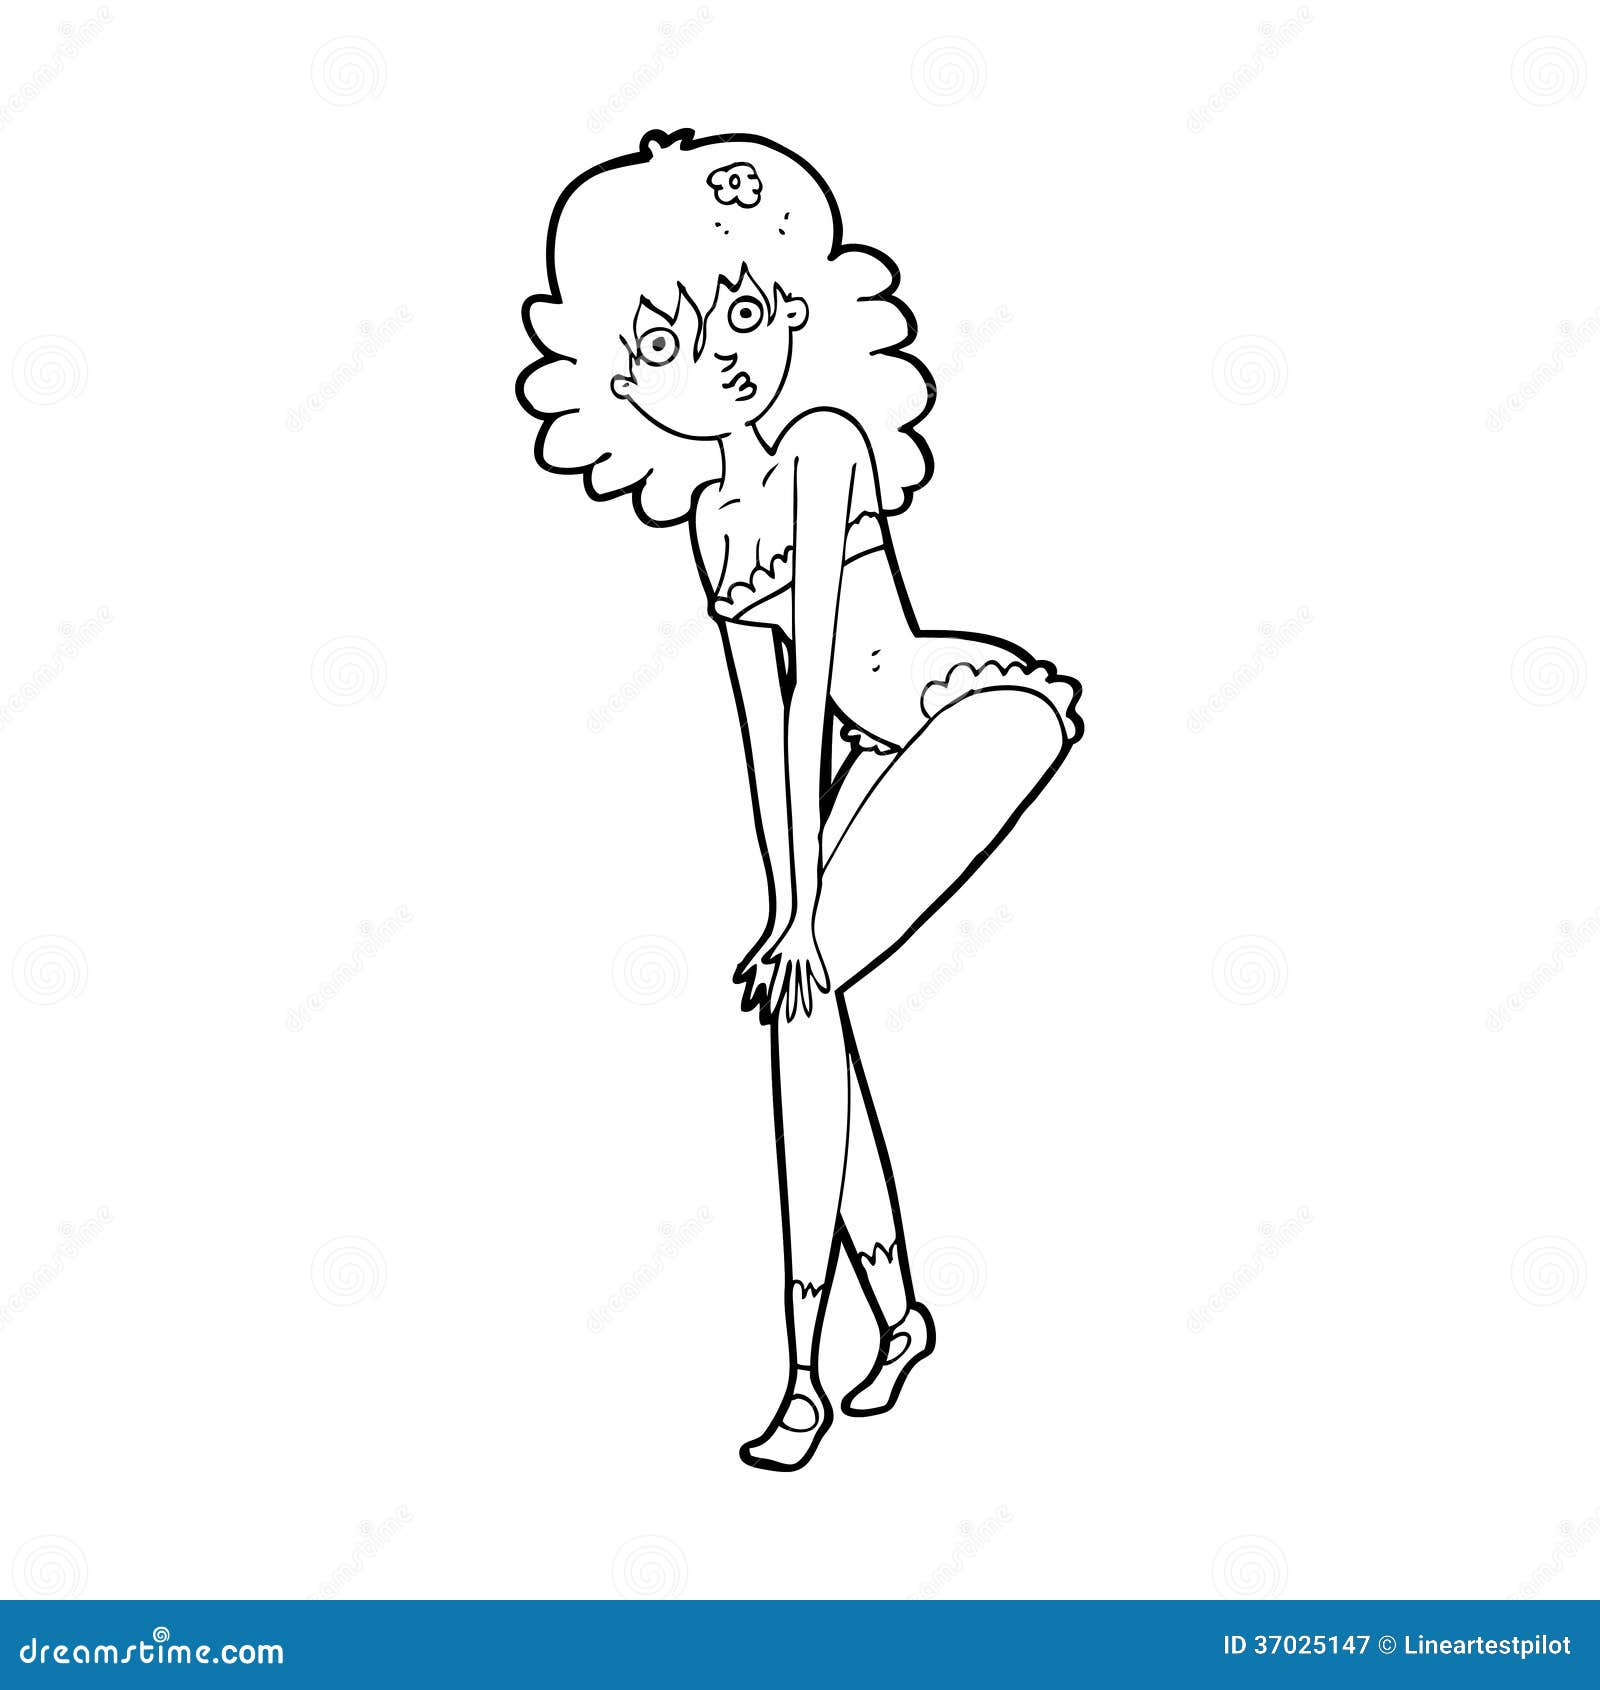 Cartoon woman in lingerie stock illustration. Illustration of funny